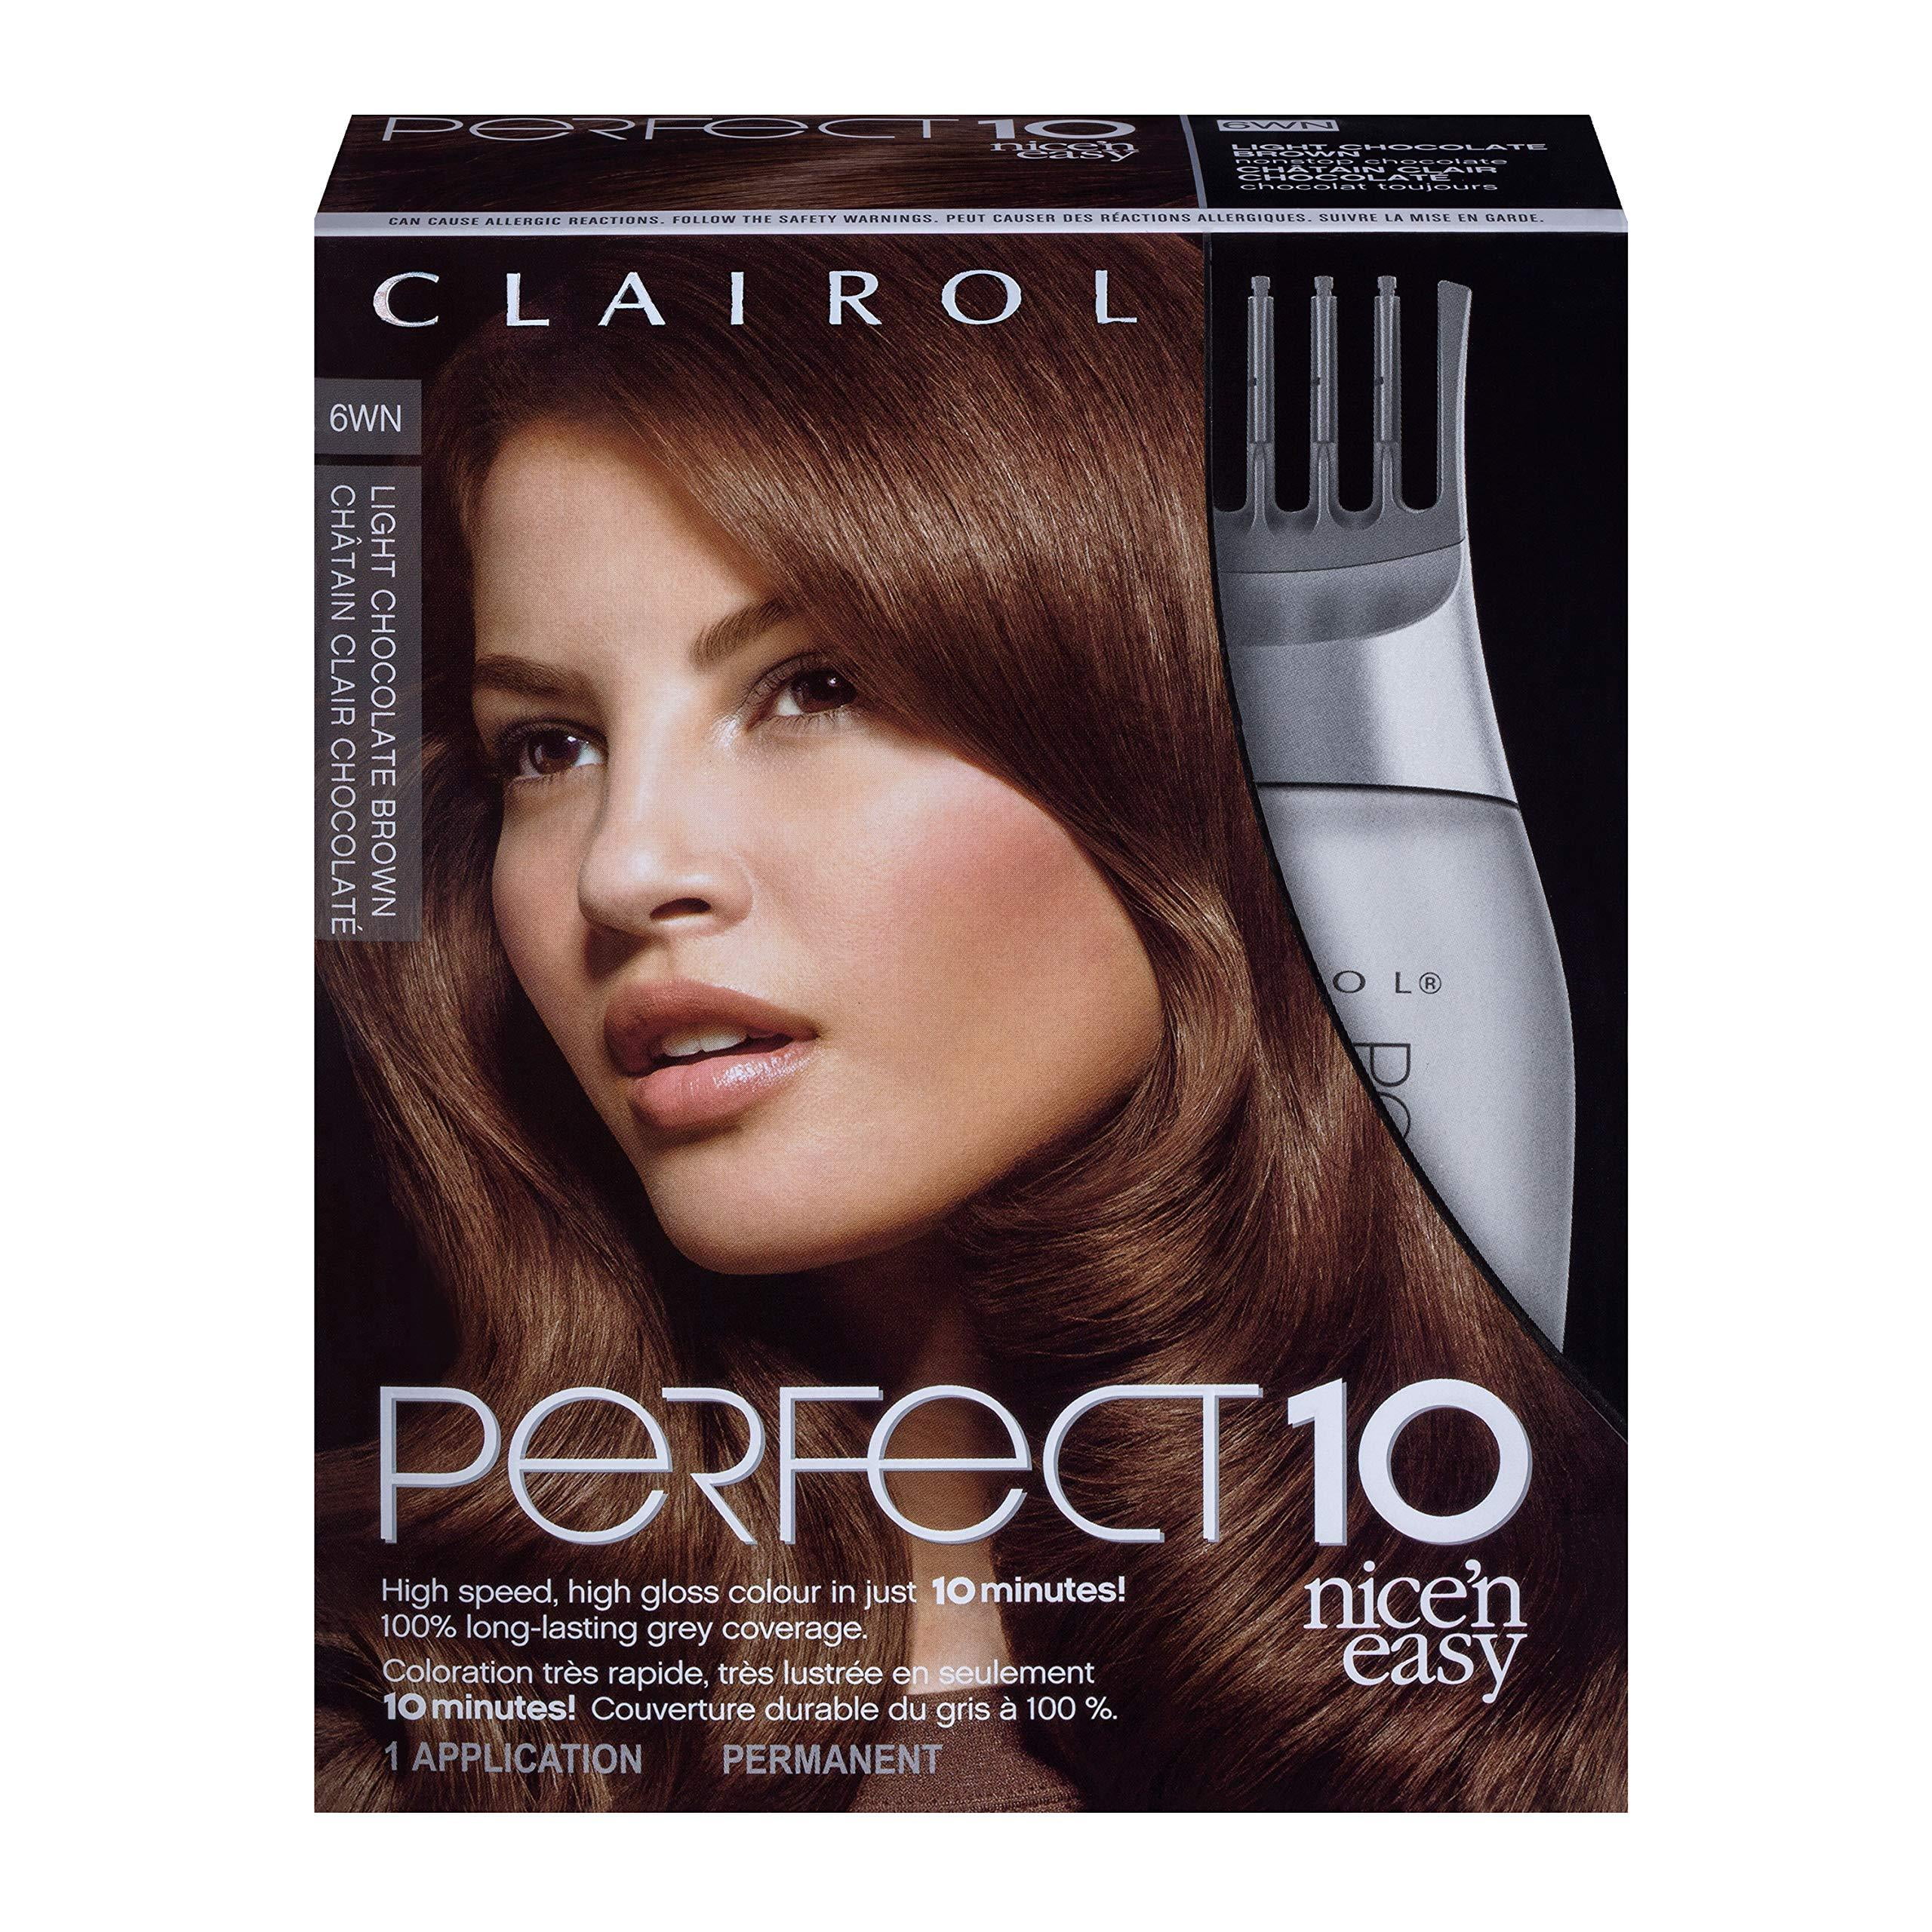 clairol-perfect-10-by-nice-n-easy-hair-color-6wn-light-chocolate-brown-1-kit-walmart